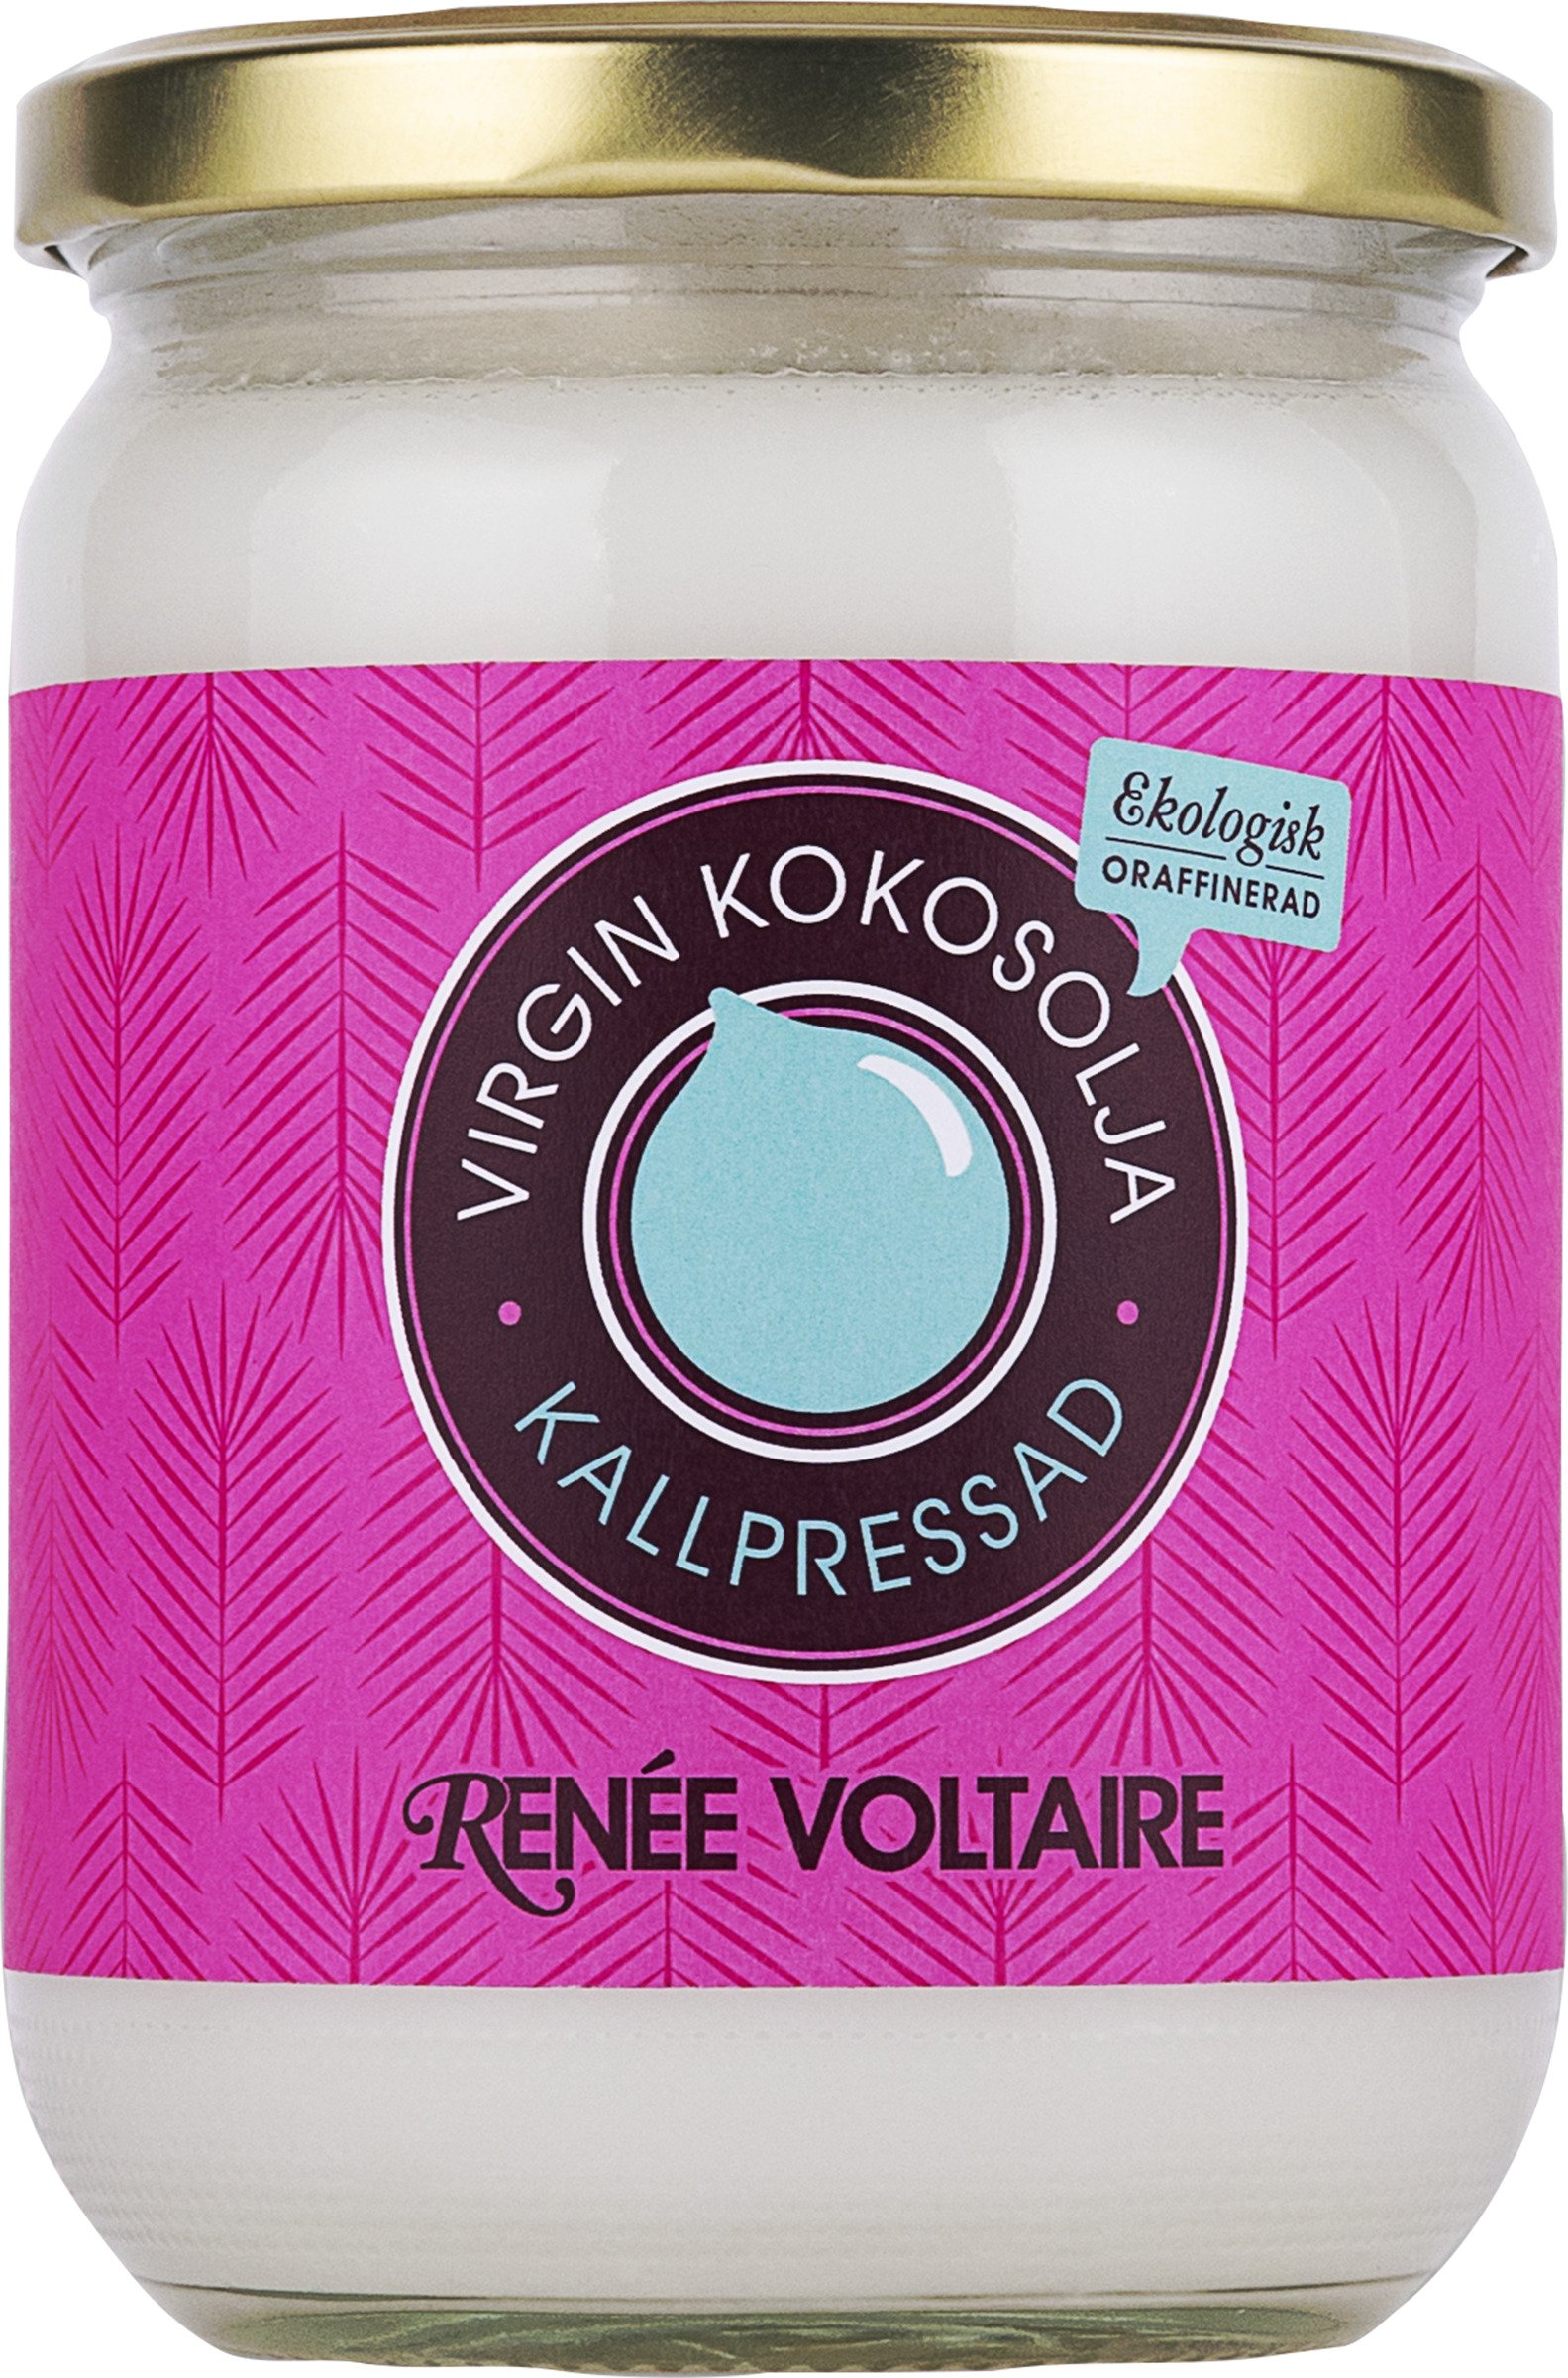 Renée Voltaire Virgin Kokosolja Kallpressad 500 ml